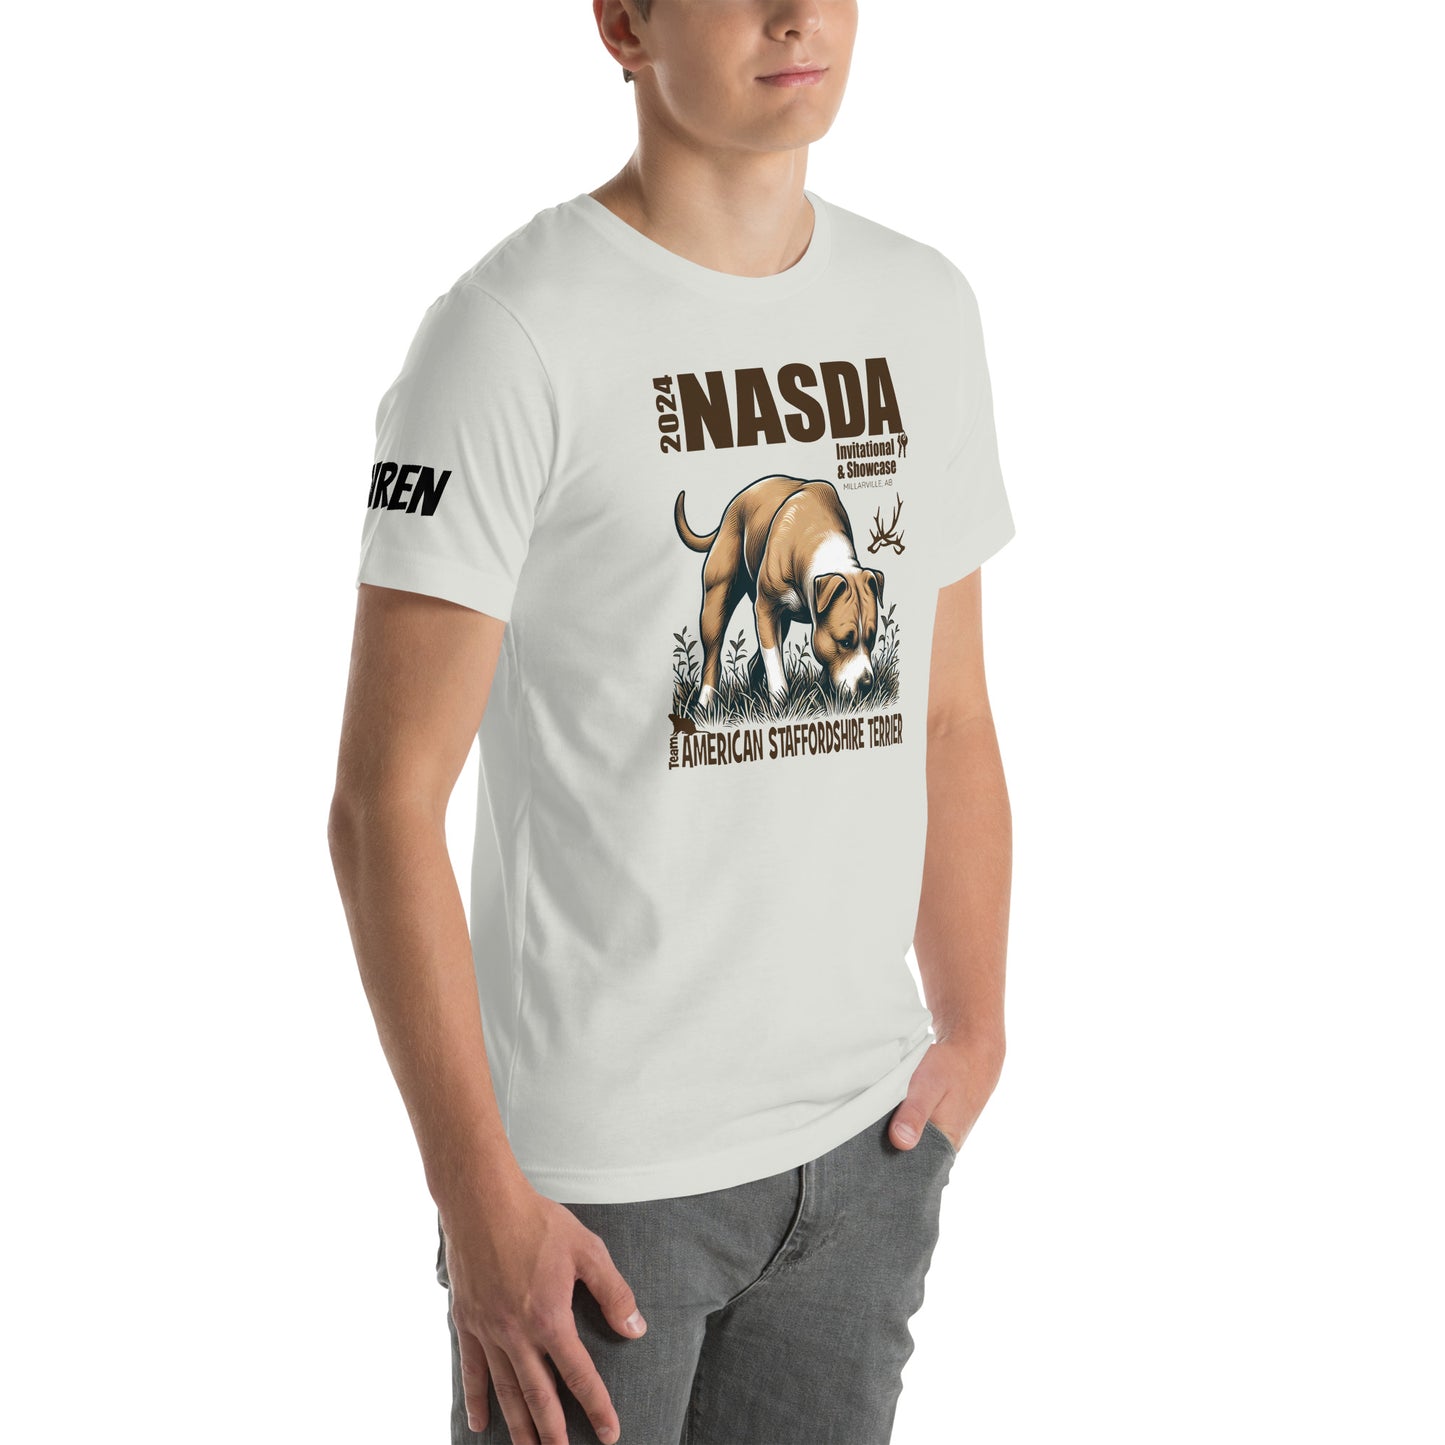 Goose and Wren Unisex t-shirt